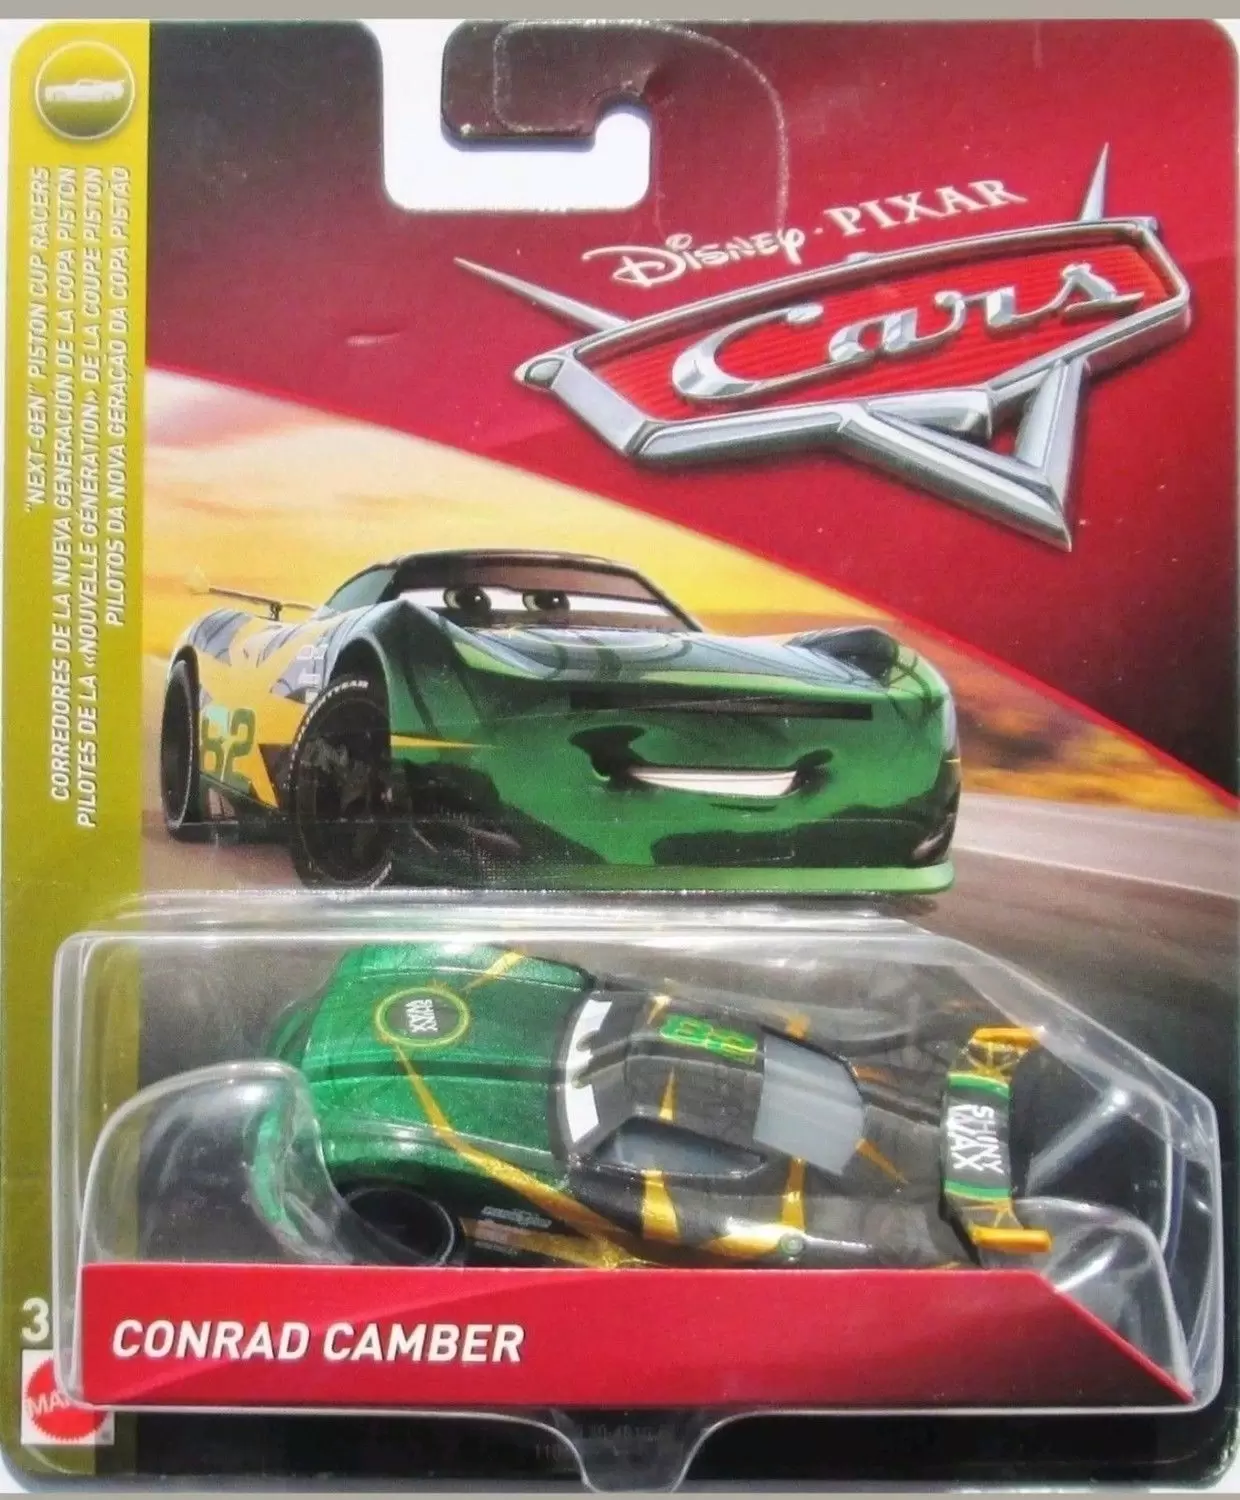 Cars 3 models - Conrad Camber